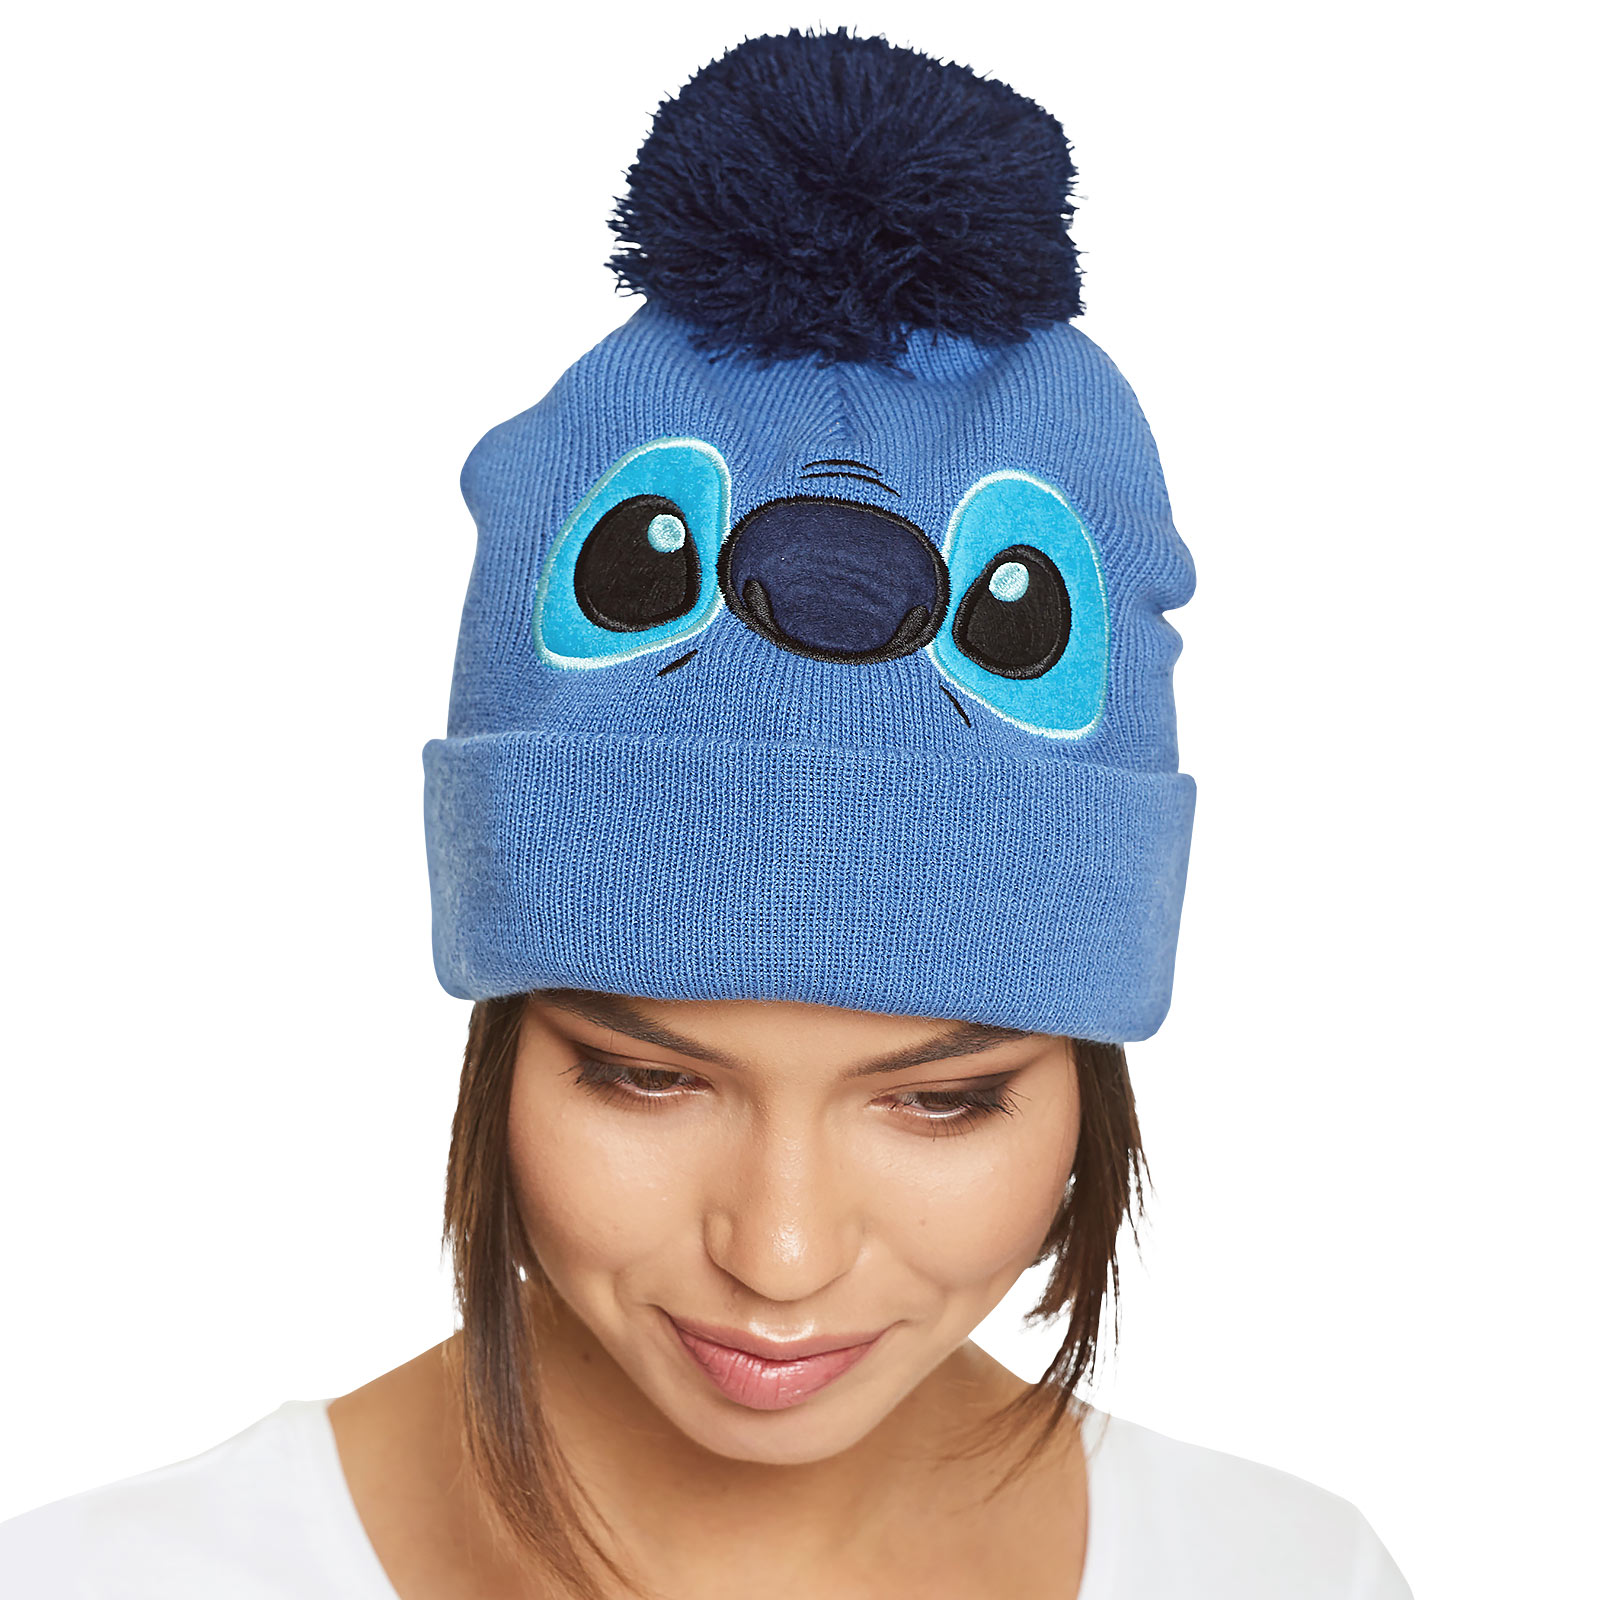 Lilo & Stitch - Stitch Face Hat